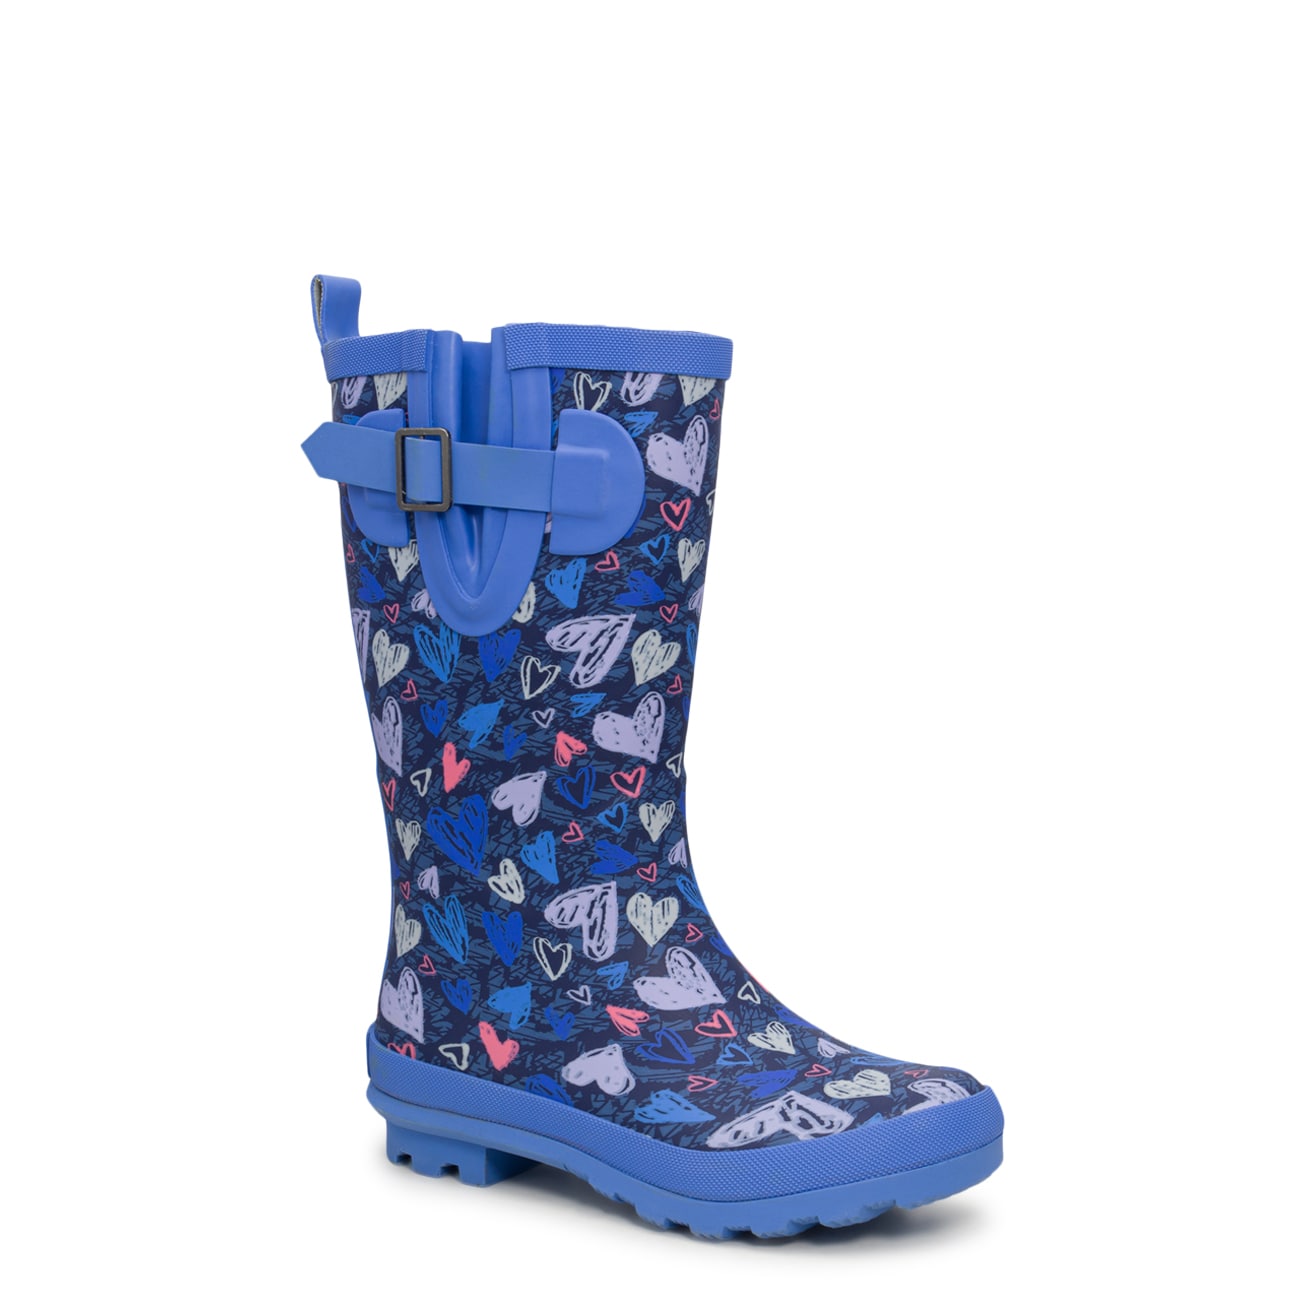 Youth Girls' Hearts Waterproof Rain Boot